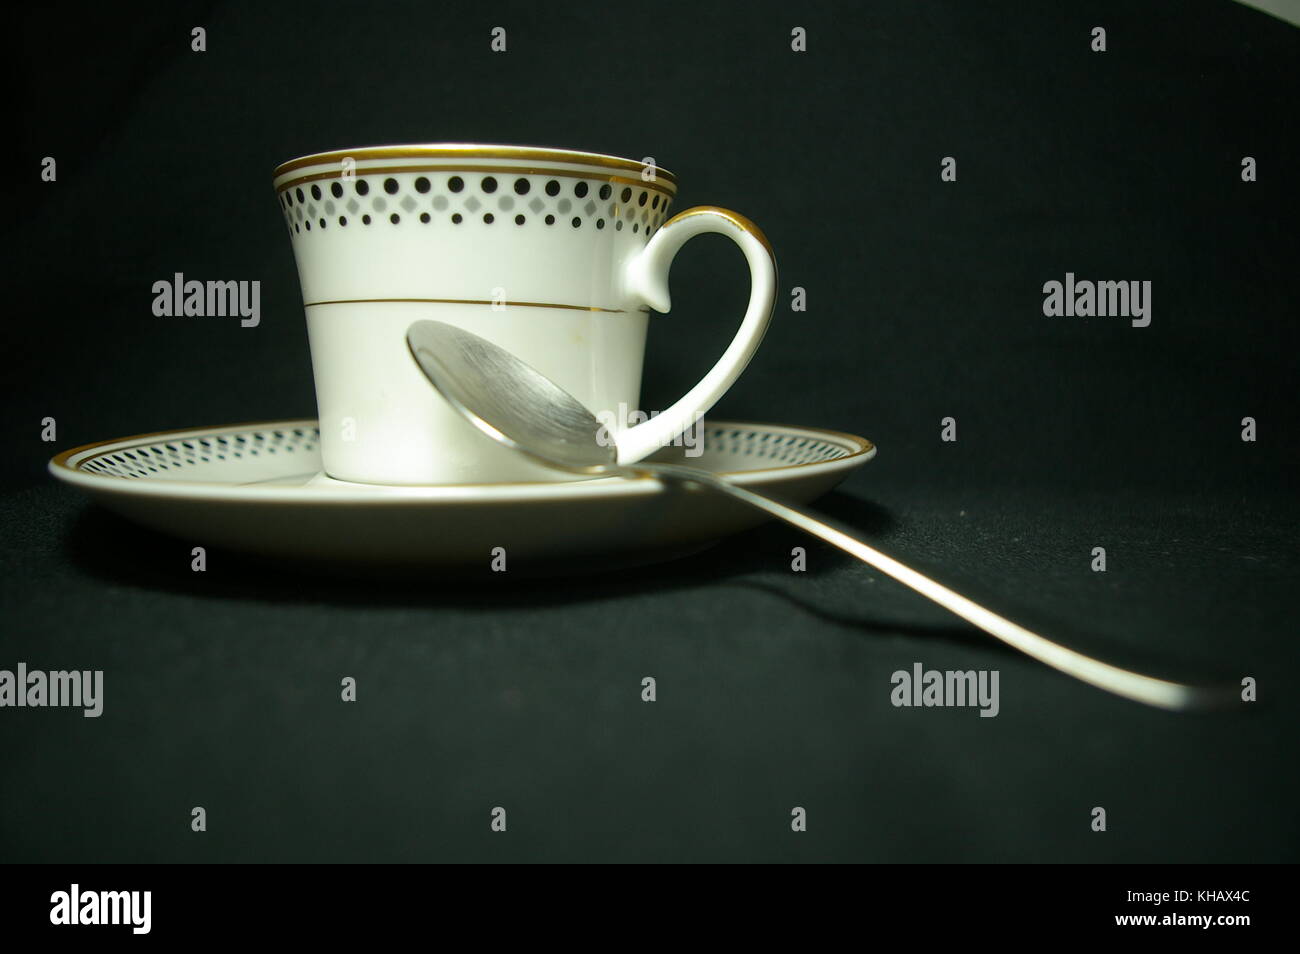 Cup and teaspoon blackbackground Stock Photo